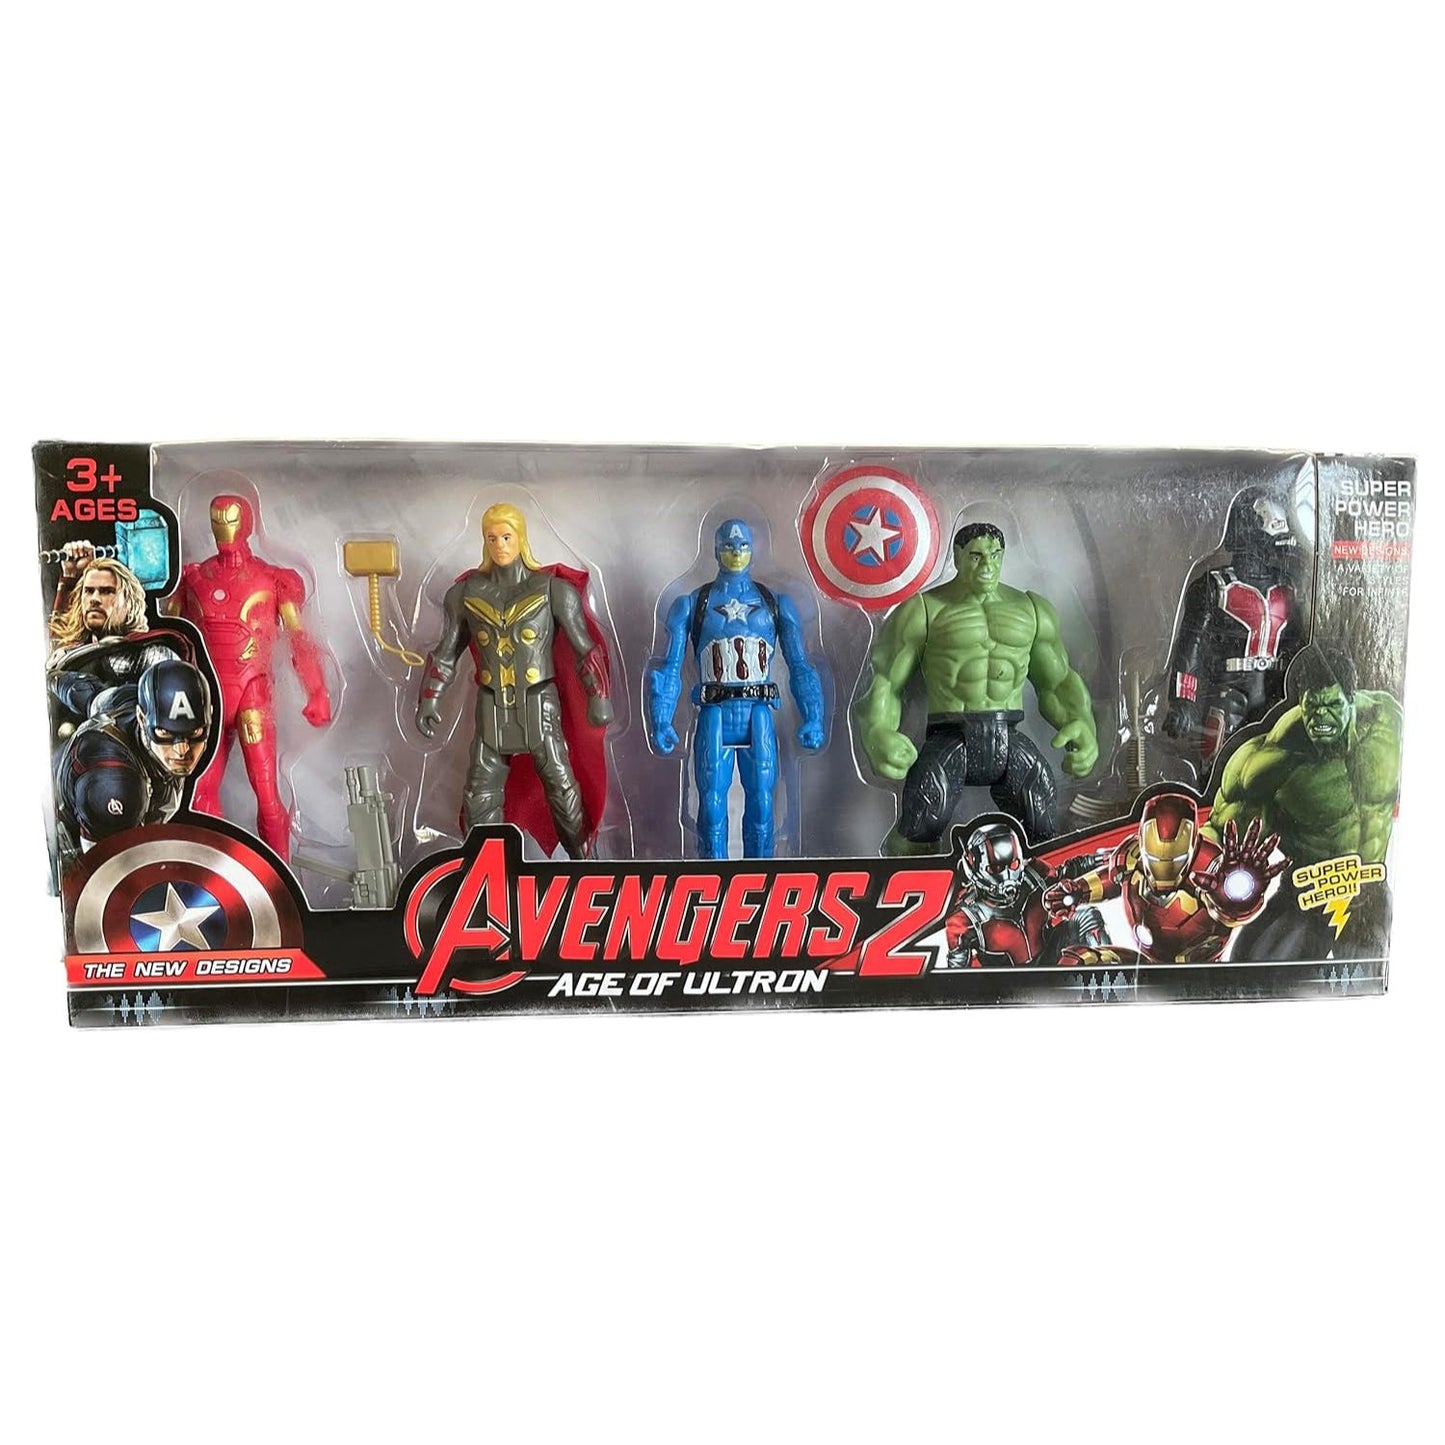 Avengers 2 Age Of Ultron | Superhero Action Figure Toys